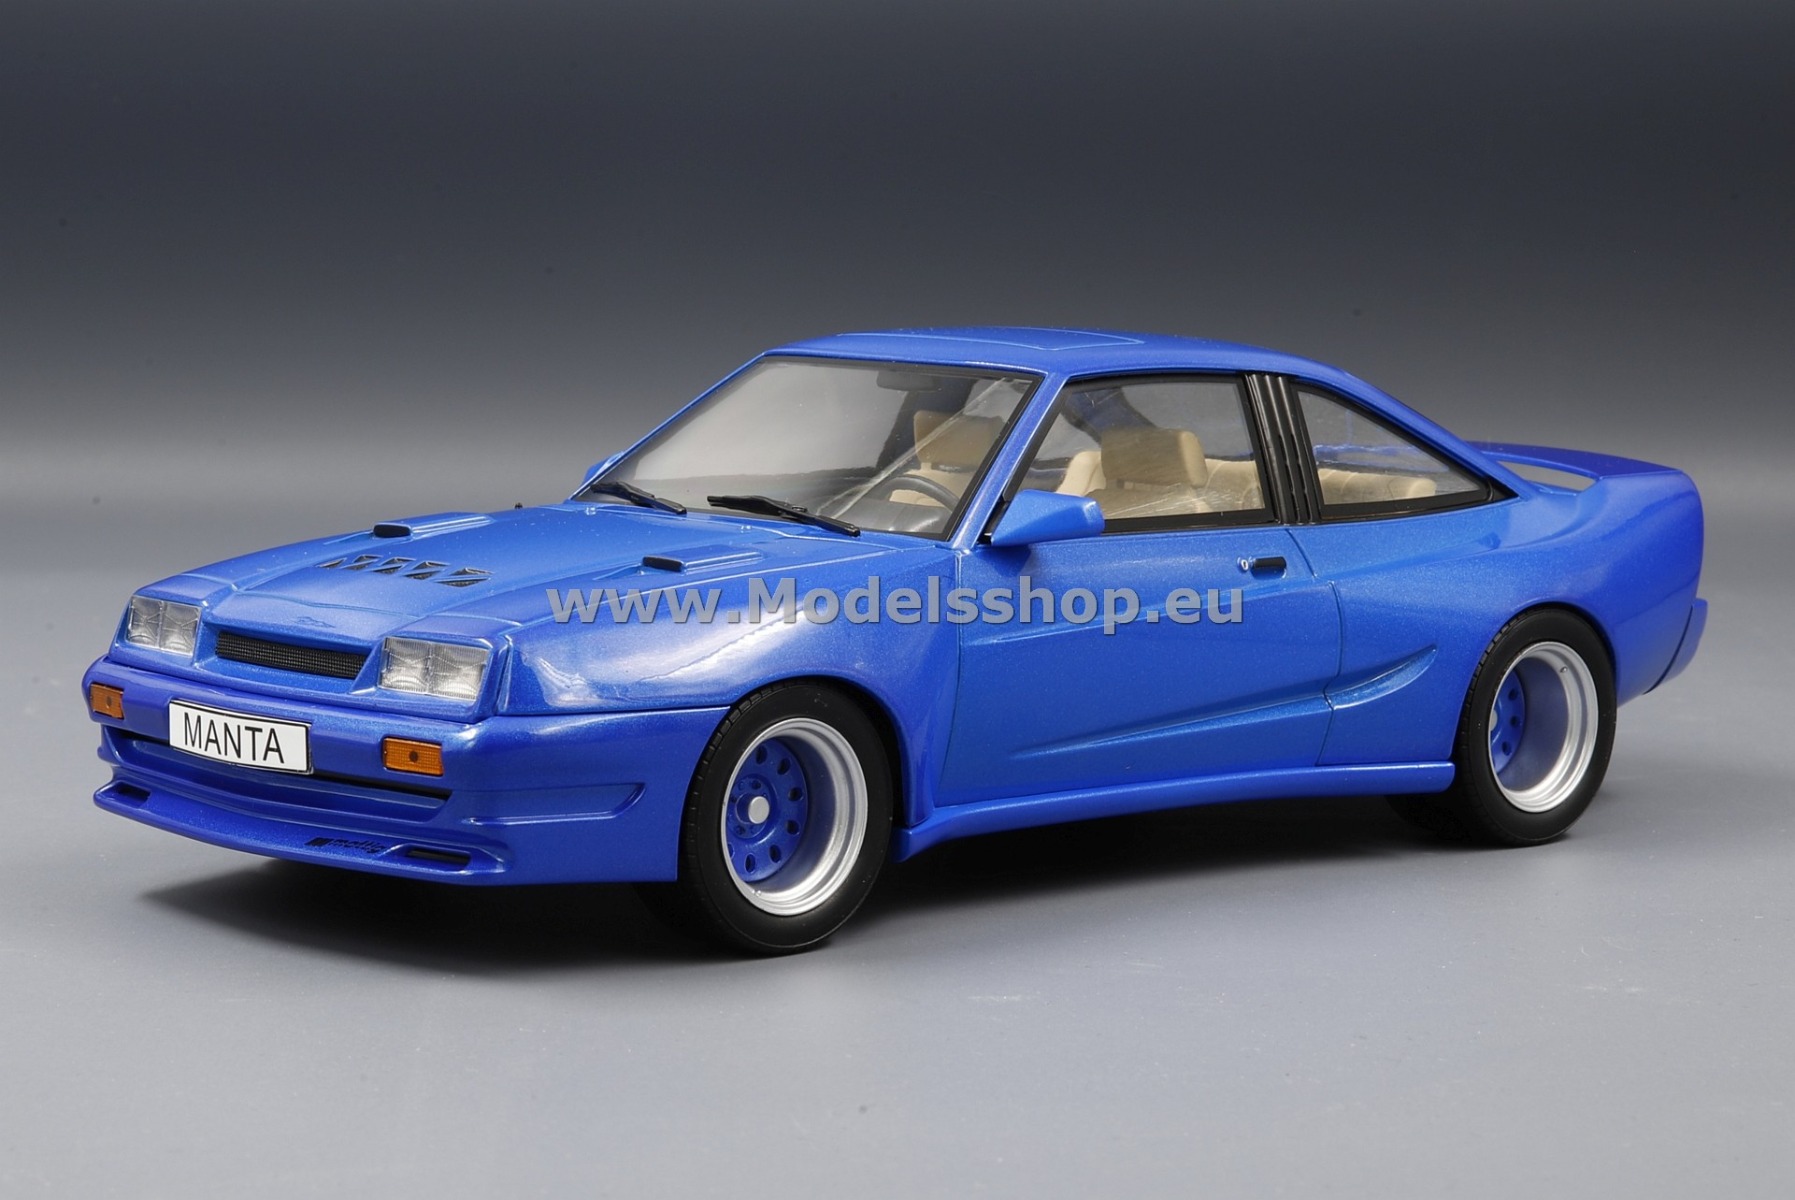 MCG 18382 Opel Manta B Mattig, 1991 /blue metallic/